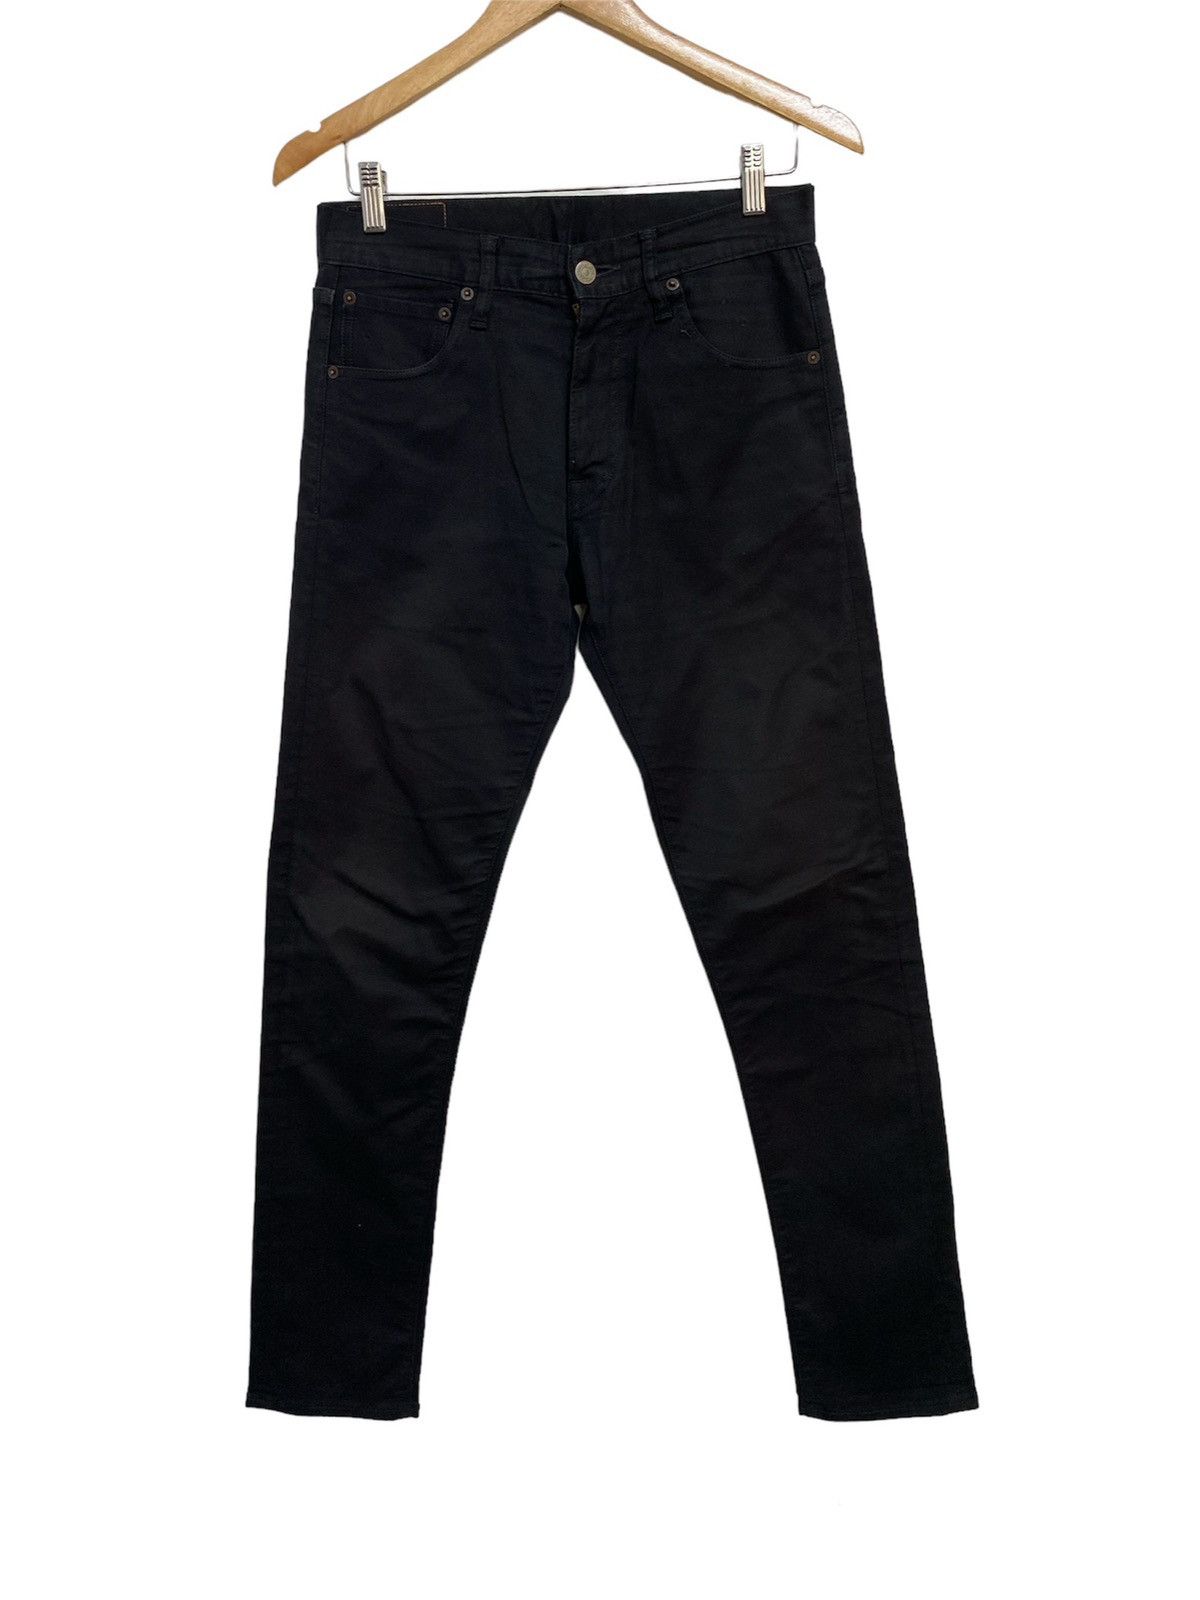 Burgus Plus Hinoya Original Black Skinny Jeans - 1